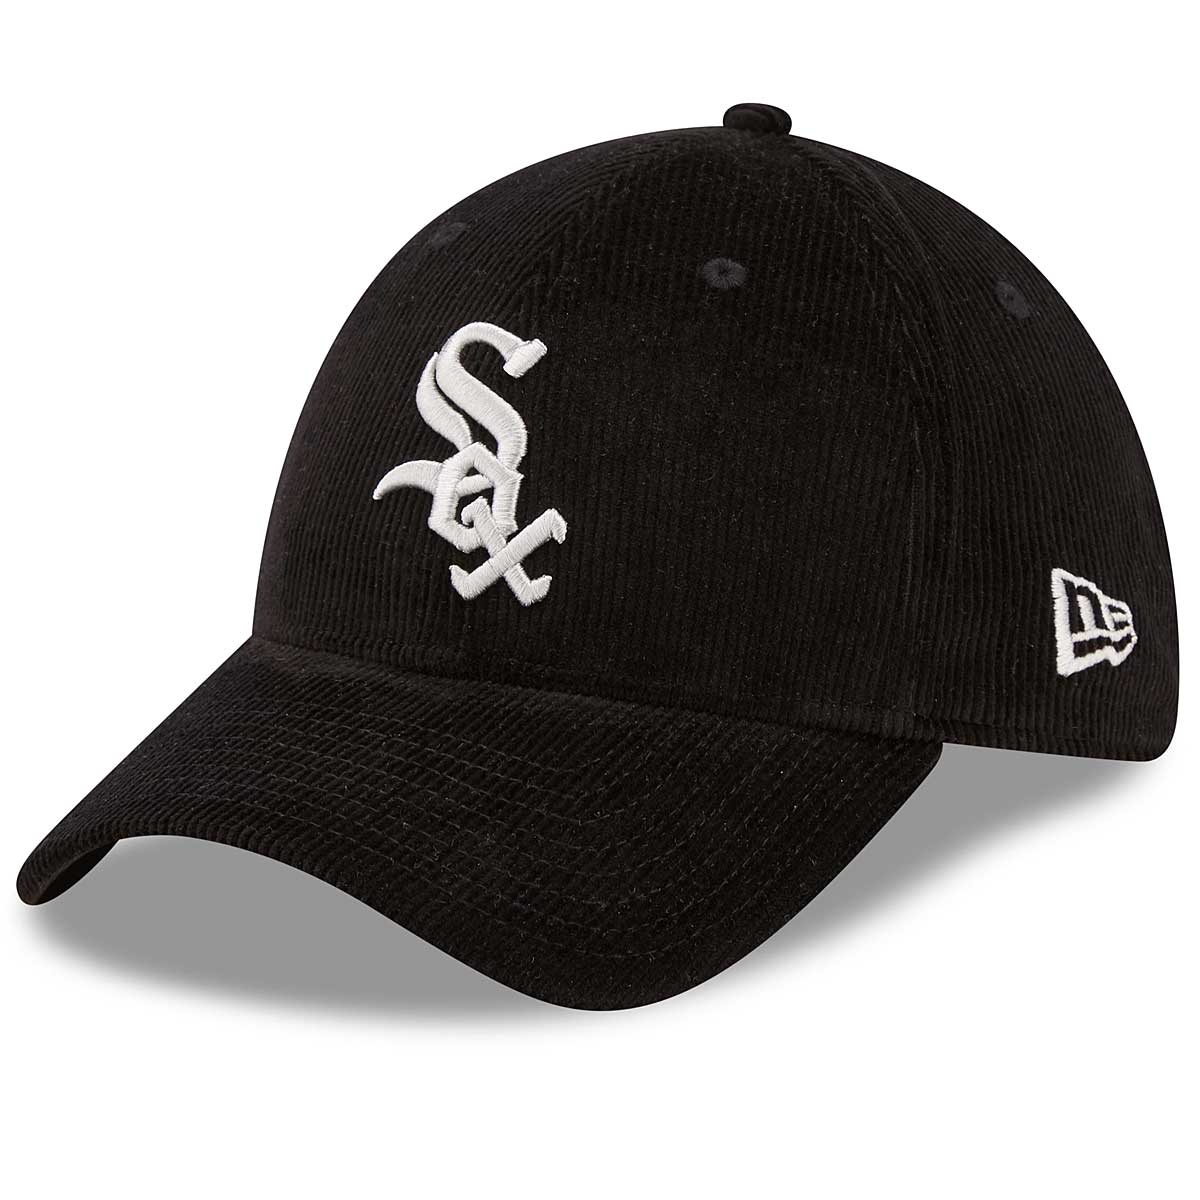 Buy MLB CORD 39THIRTY CHICAGO WHITE SOX for N/A 0.0 on KICKZ.com!